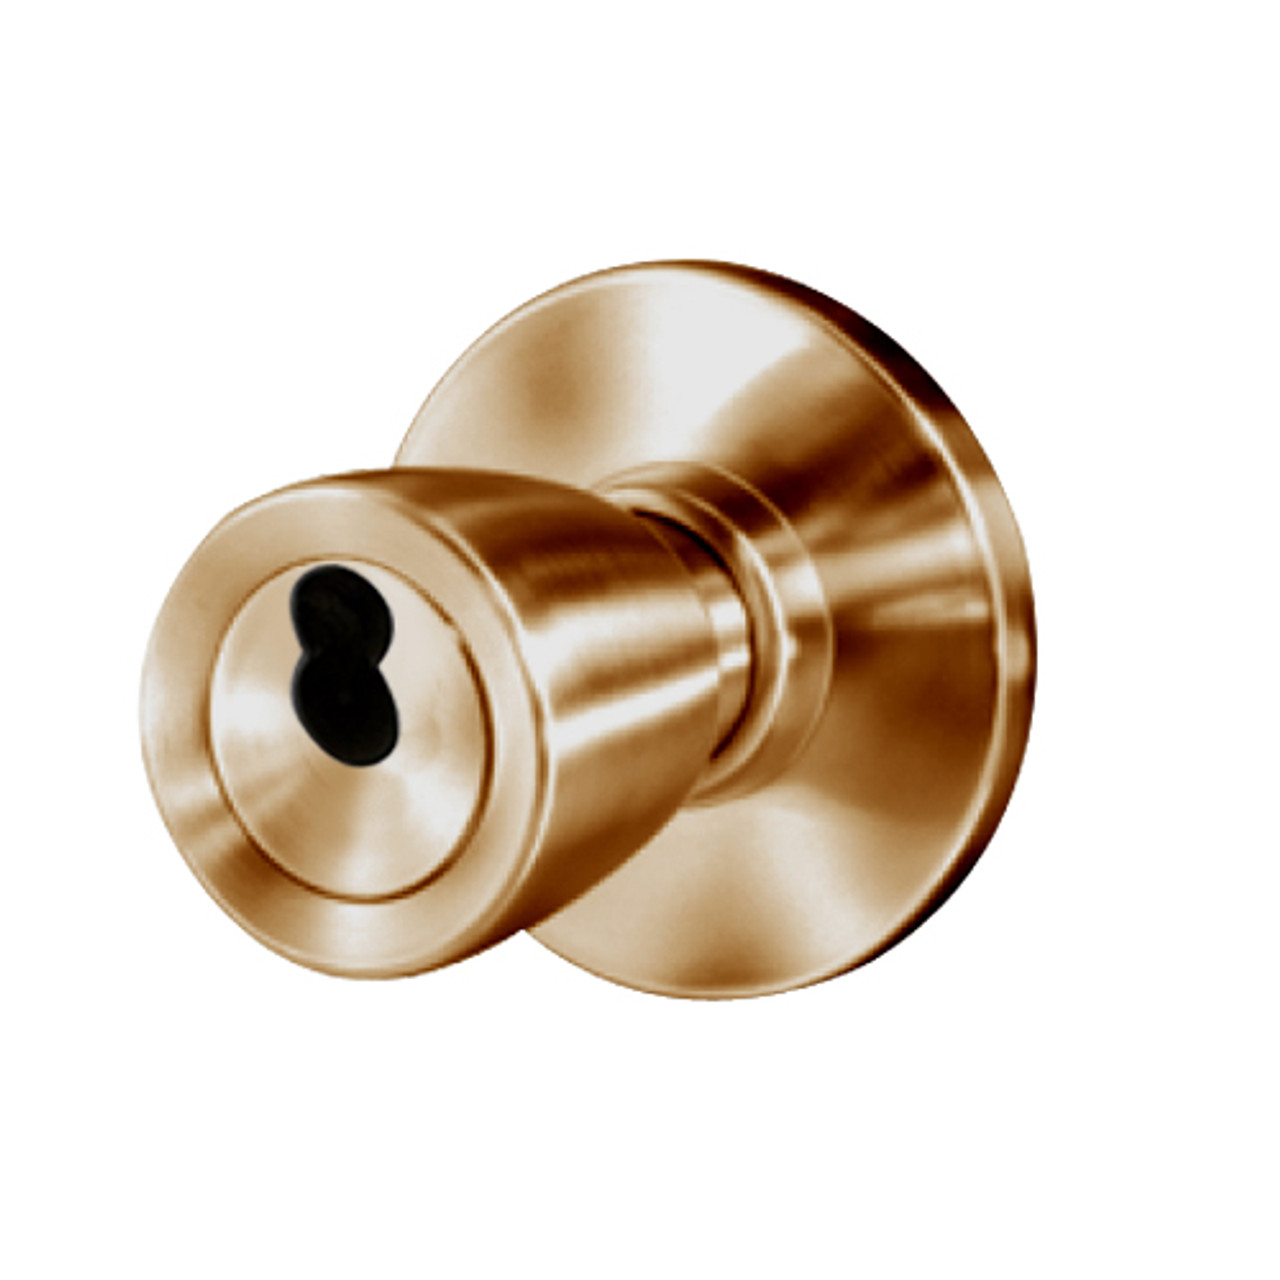 8K47YD6ASTK612 Best 8K Series Exit Heavy Duty Cylindrical Knob Locks with Tulip Style in Satin Bronze